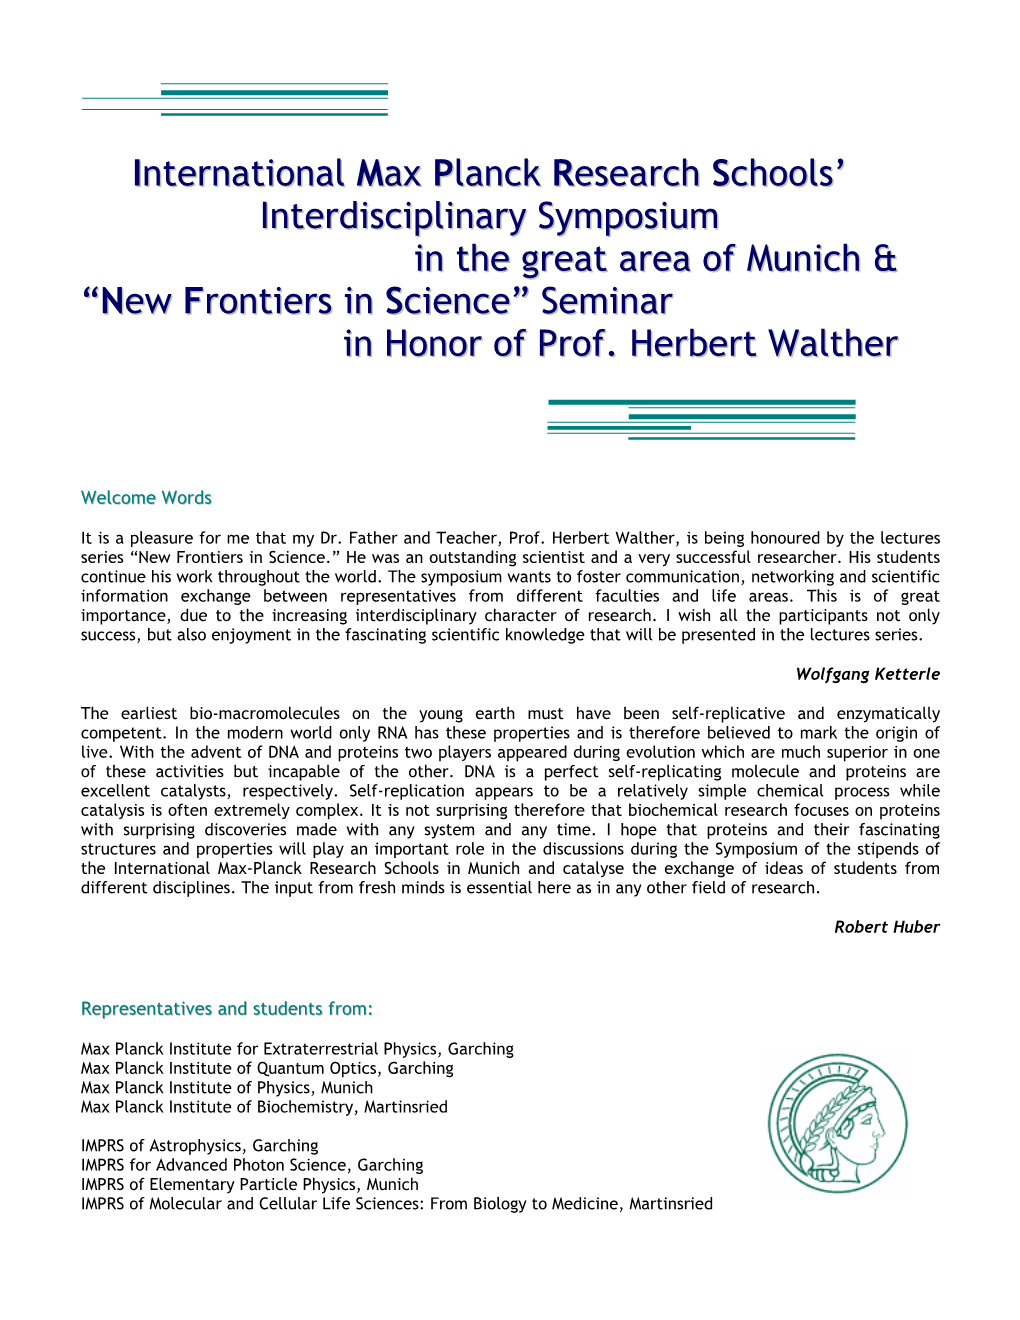 International Max Planck Research Schools' Interdisciplinary